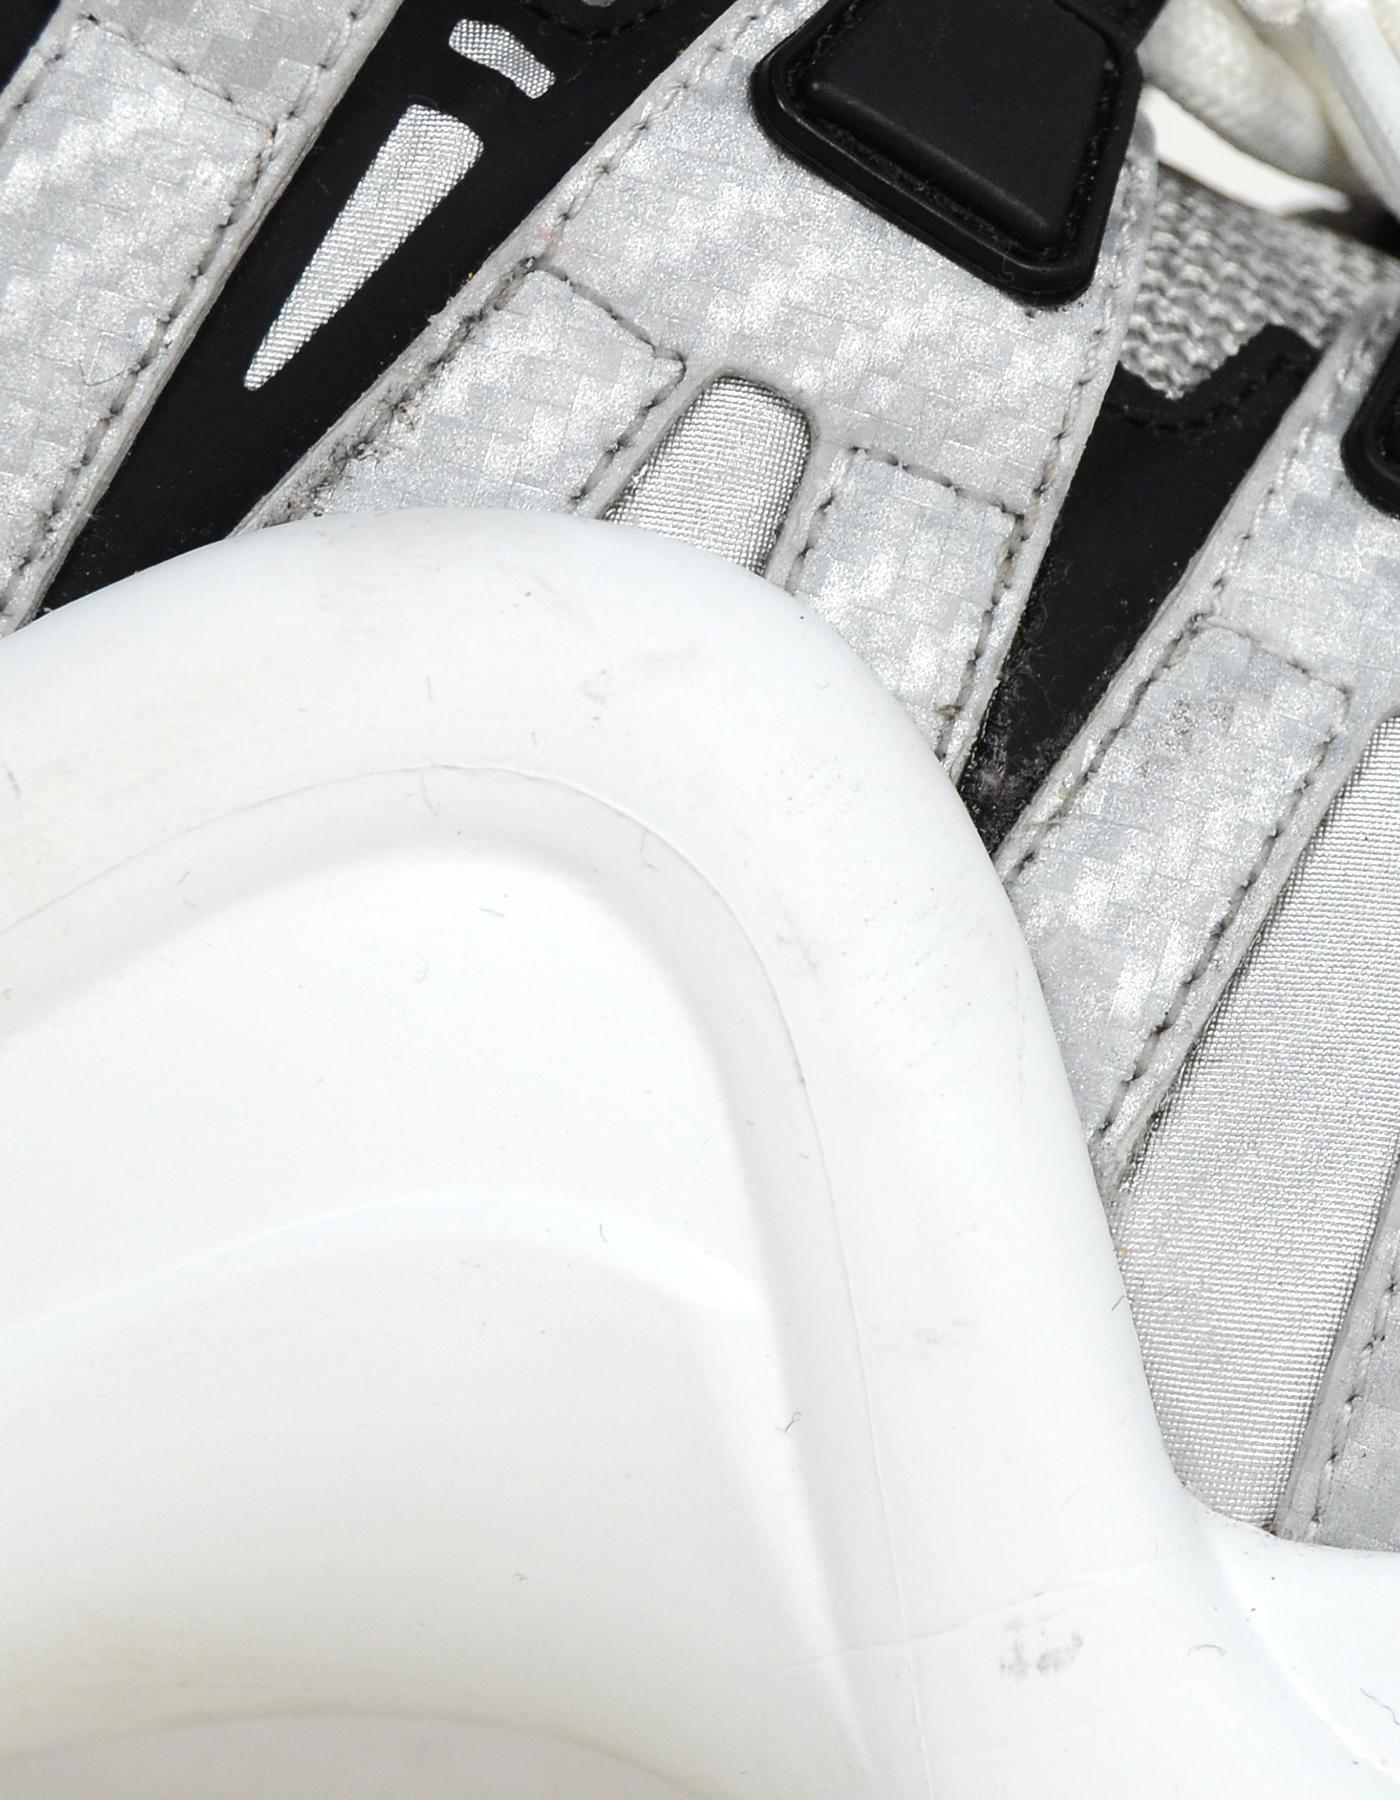 Louis Vuitton 2018 Silver/Black Archlight Reflective Sneakers sz 39 rt $1, 500 2